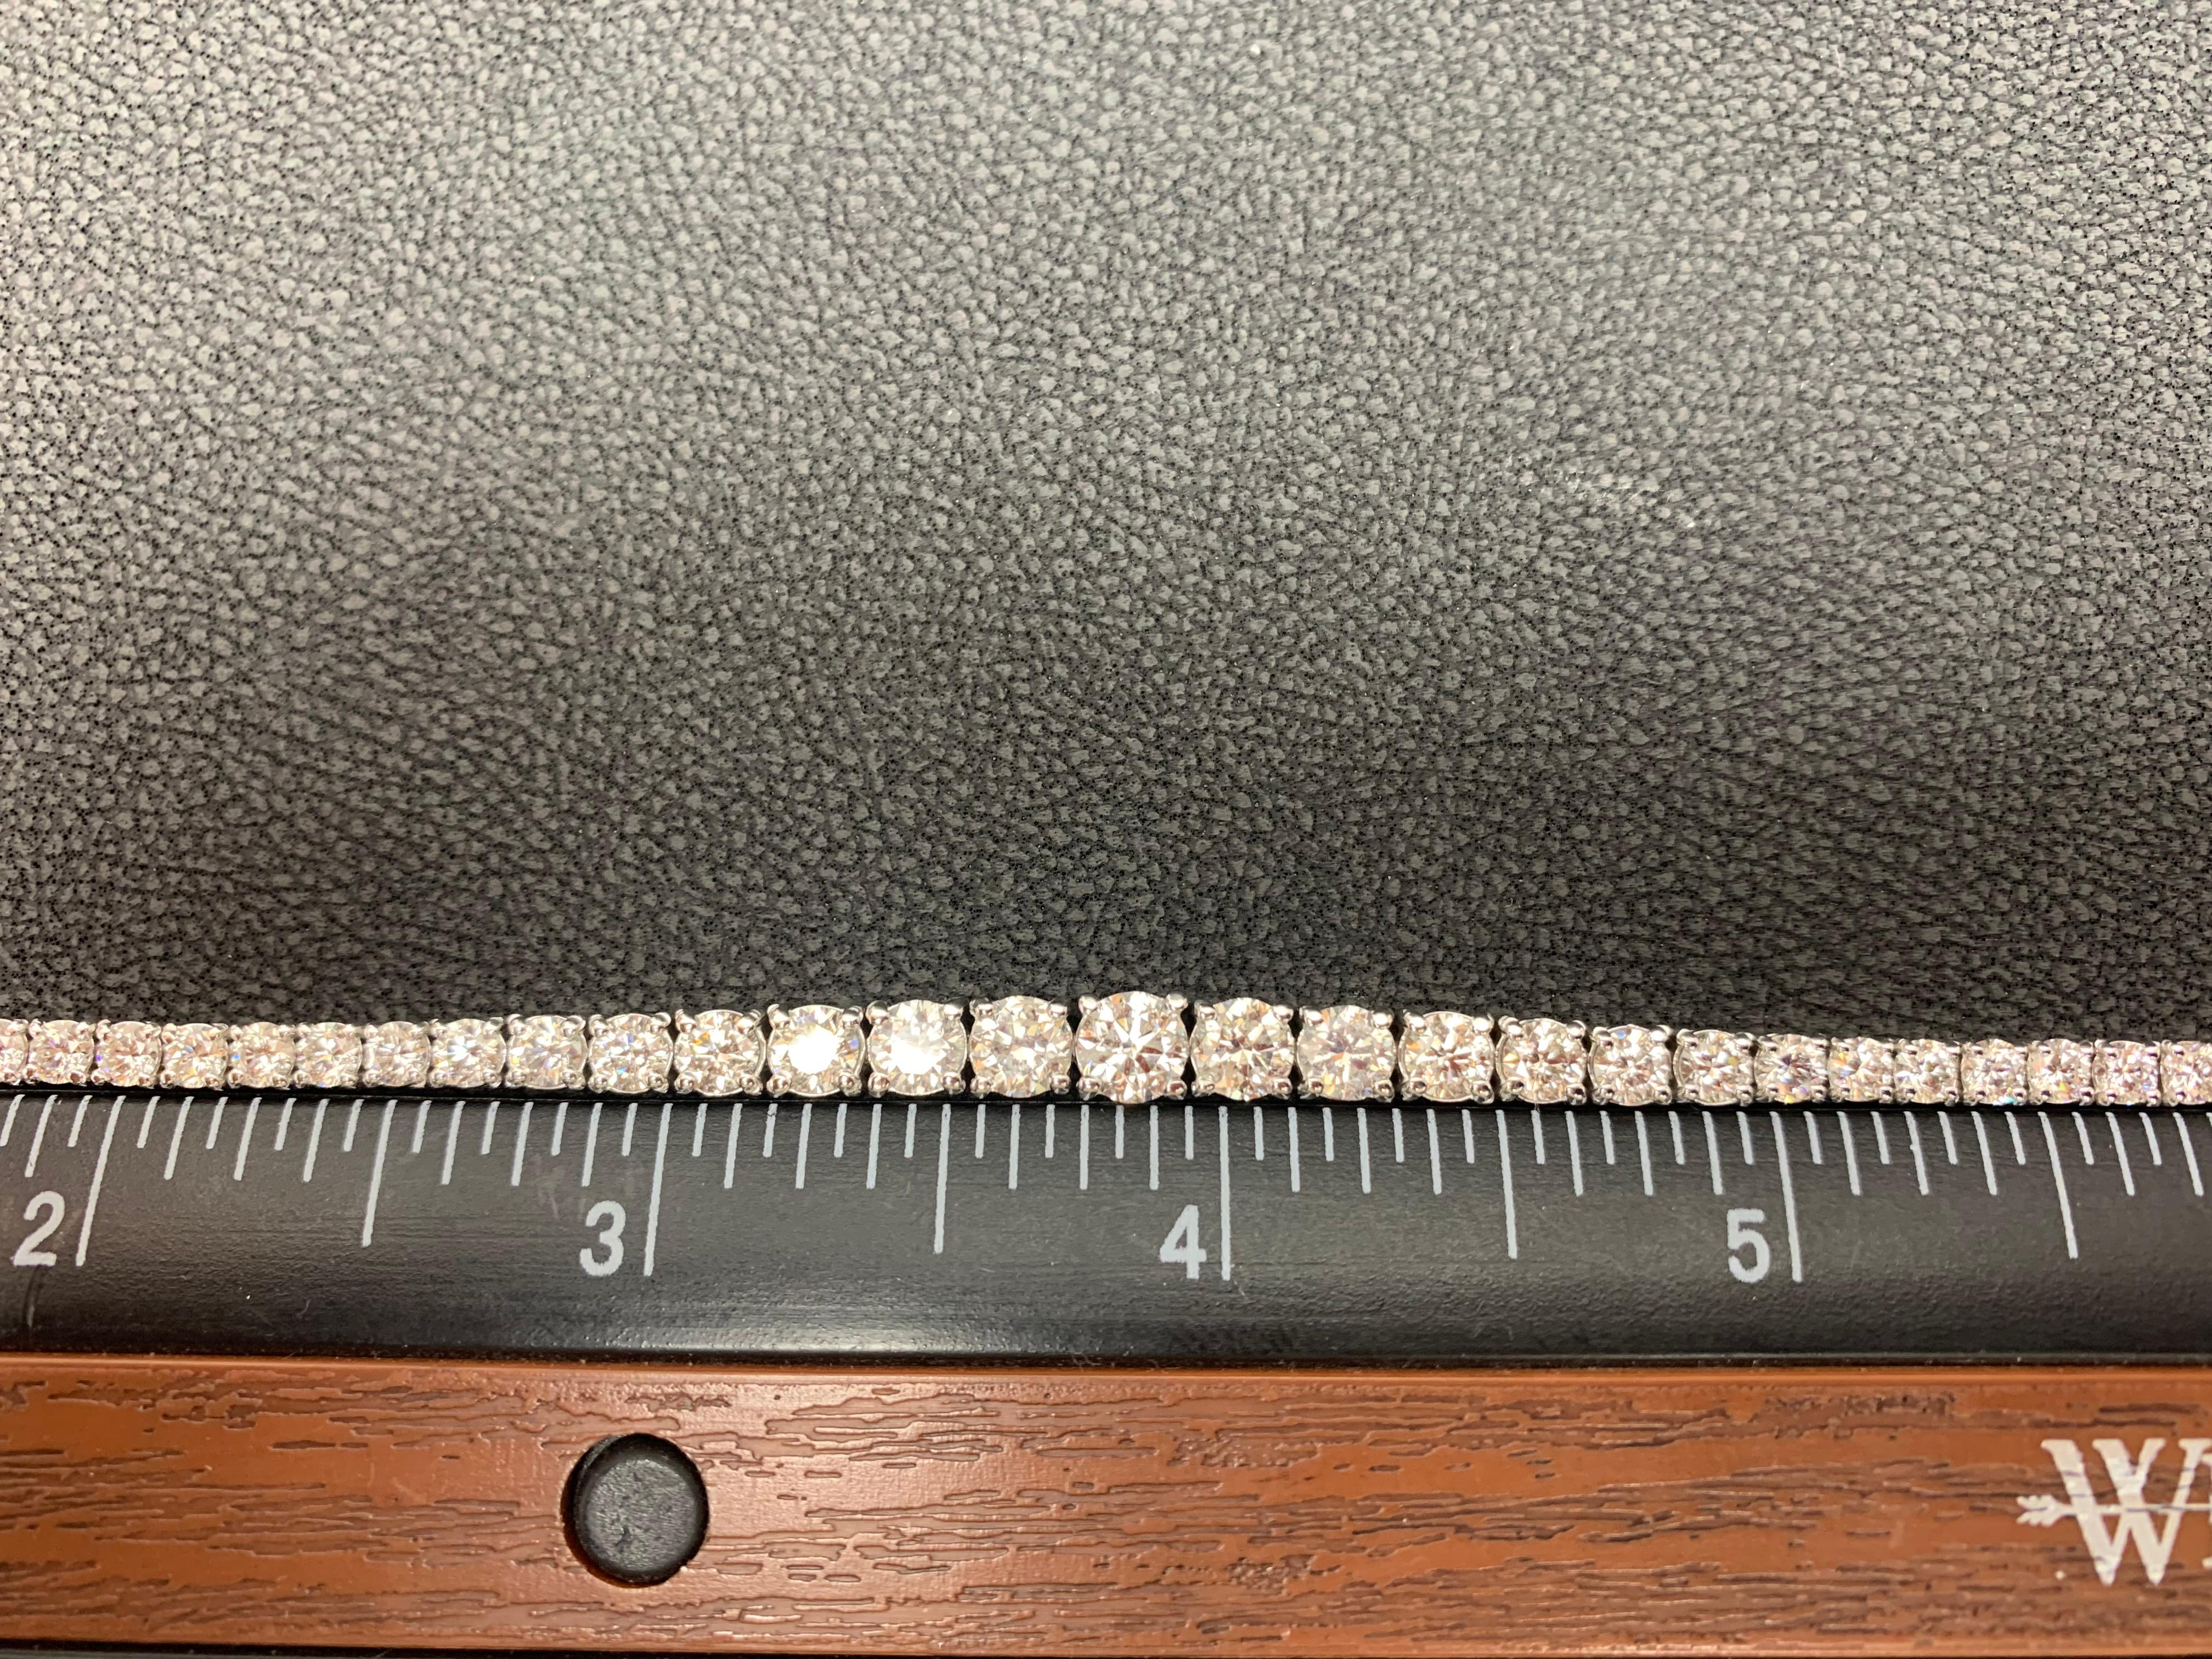 7.02 Carat Round Cut Diamond Tennis Bracelet in 14K White Gold For Sale 5